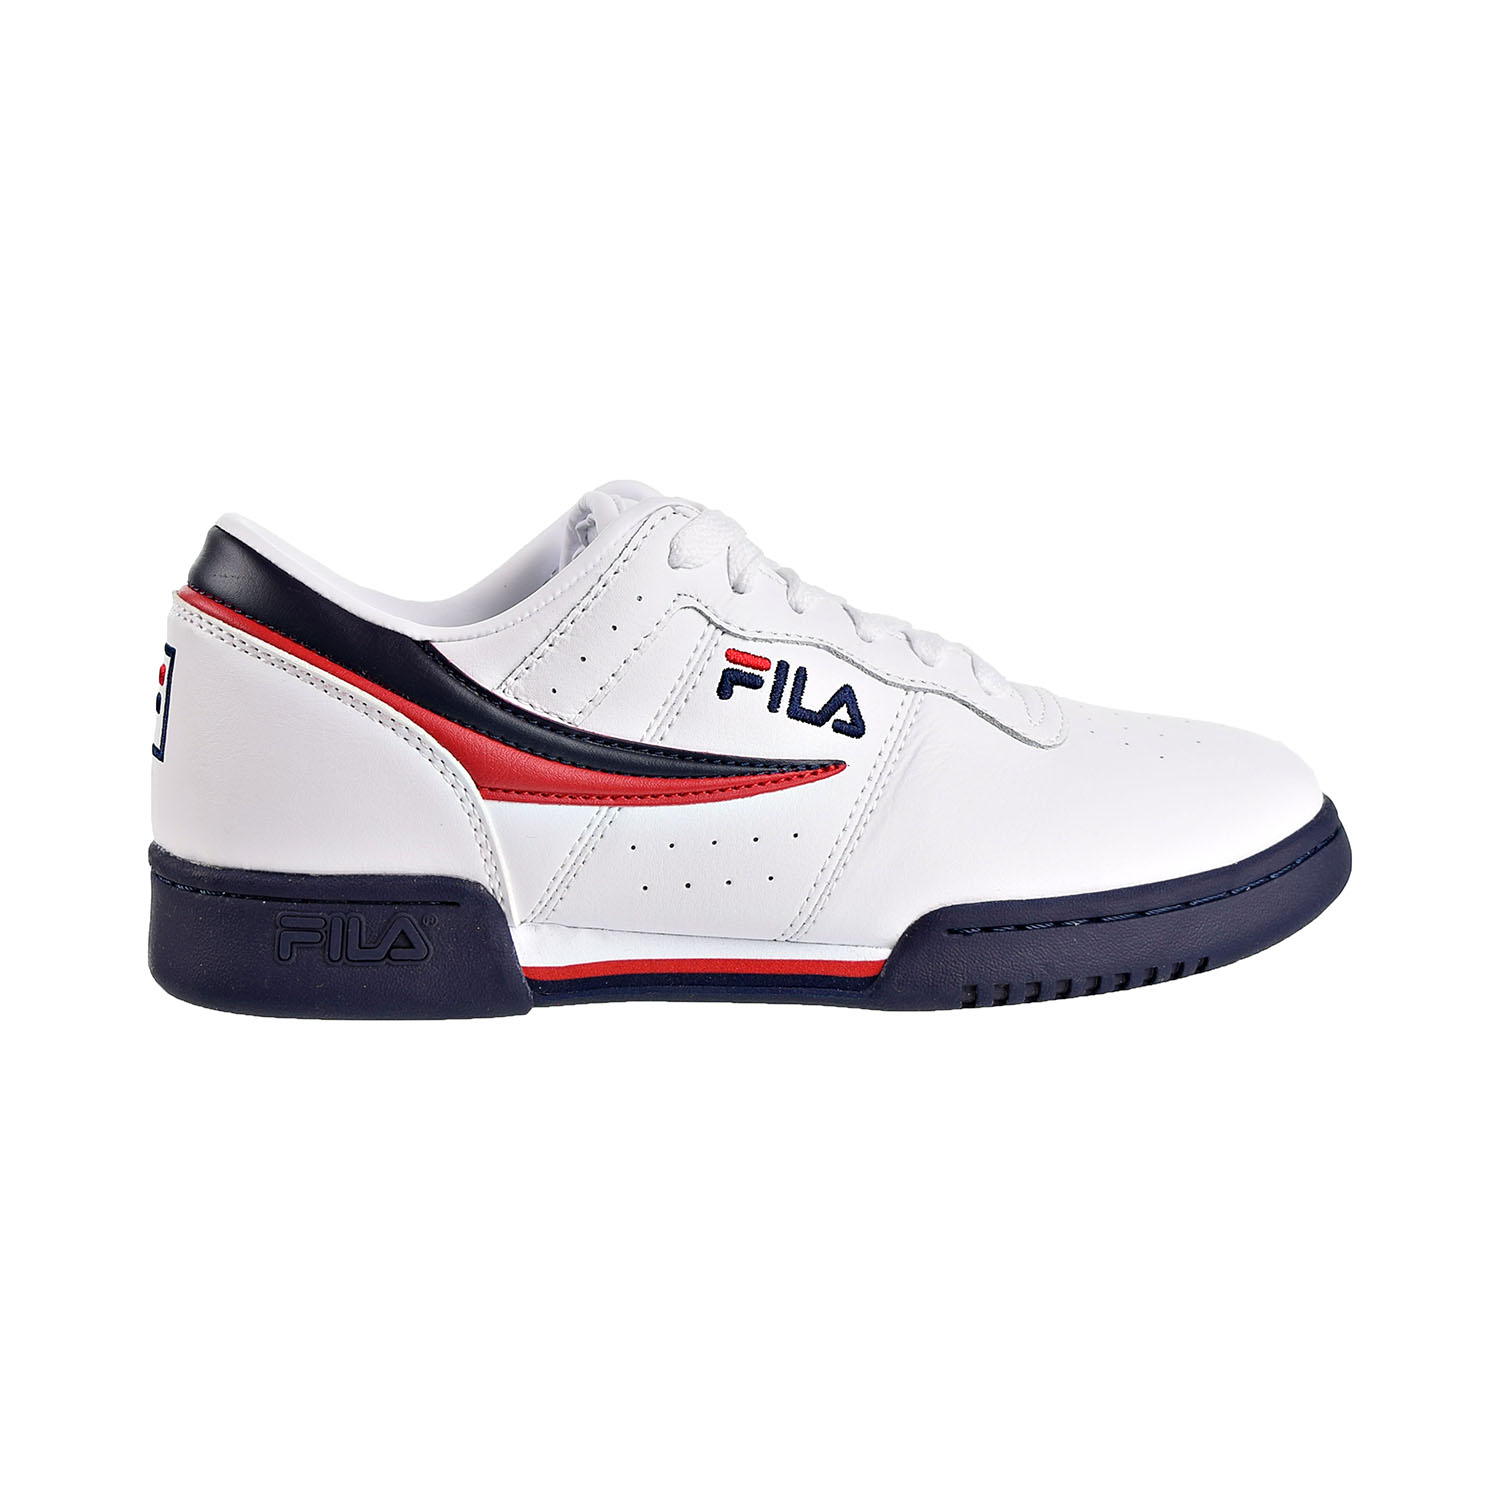 Fila Original Fitness Low Men's Shoes White-Navy-Red 11F16LT-150 | eBay